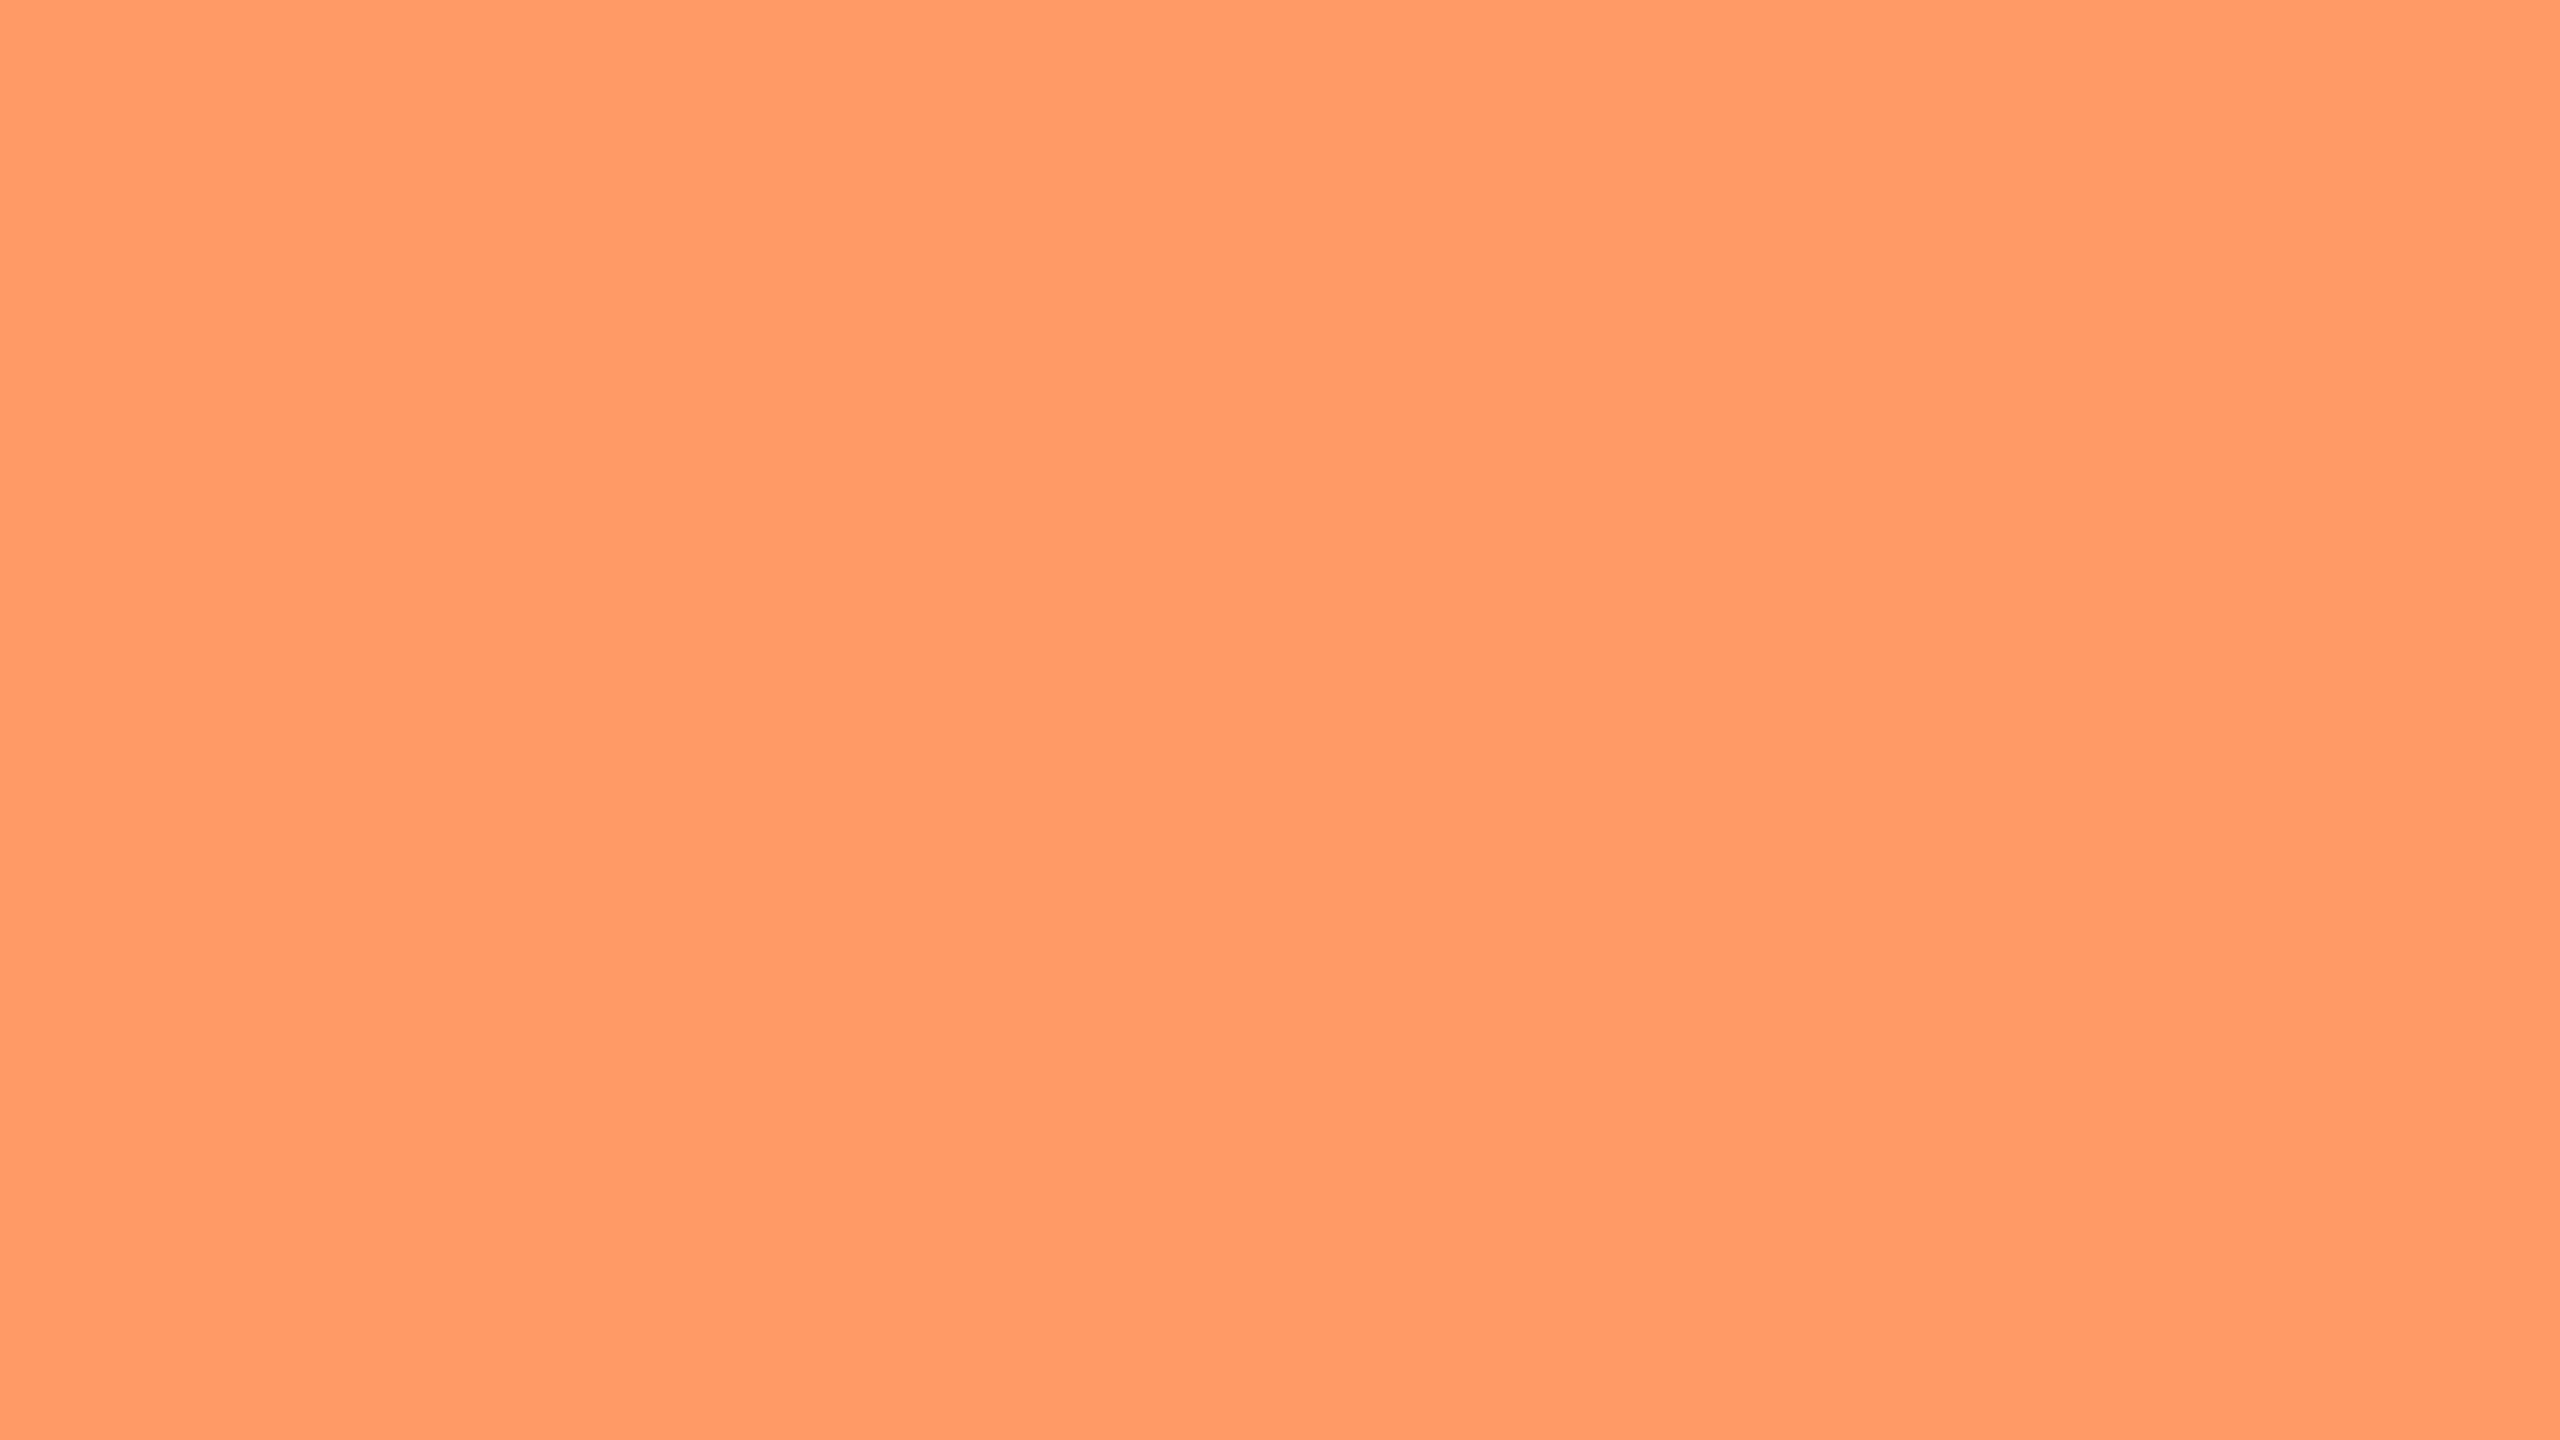 Solid Orange Wallpaper